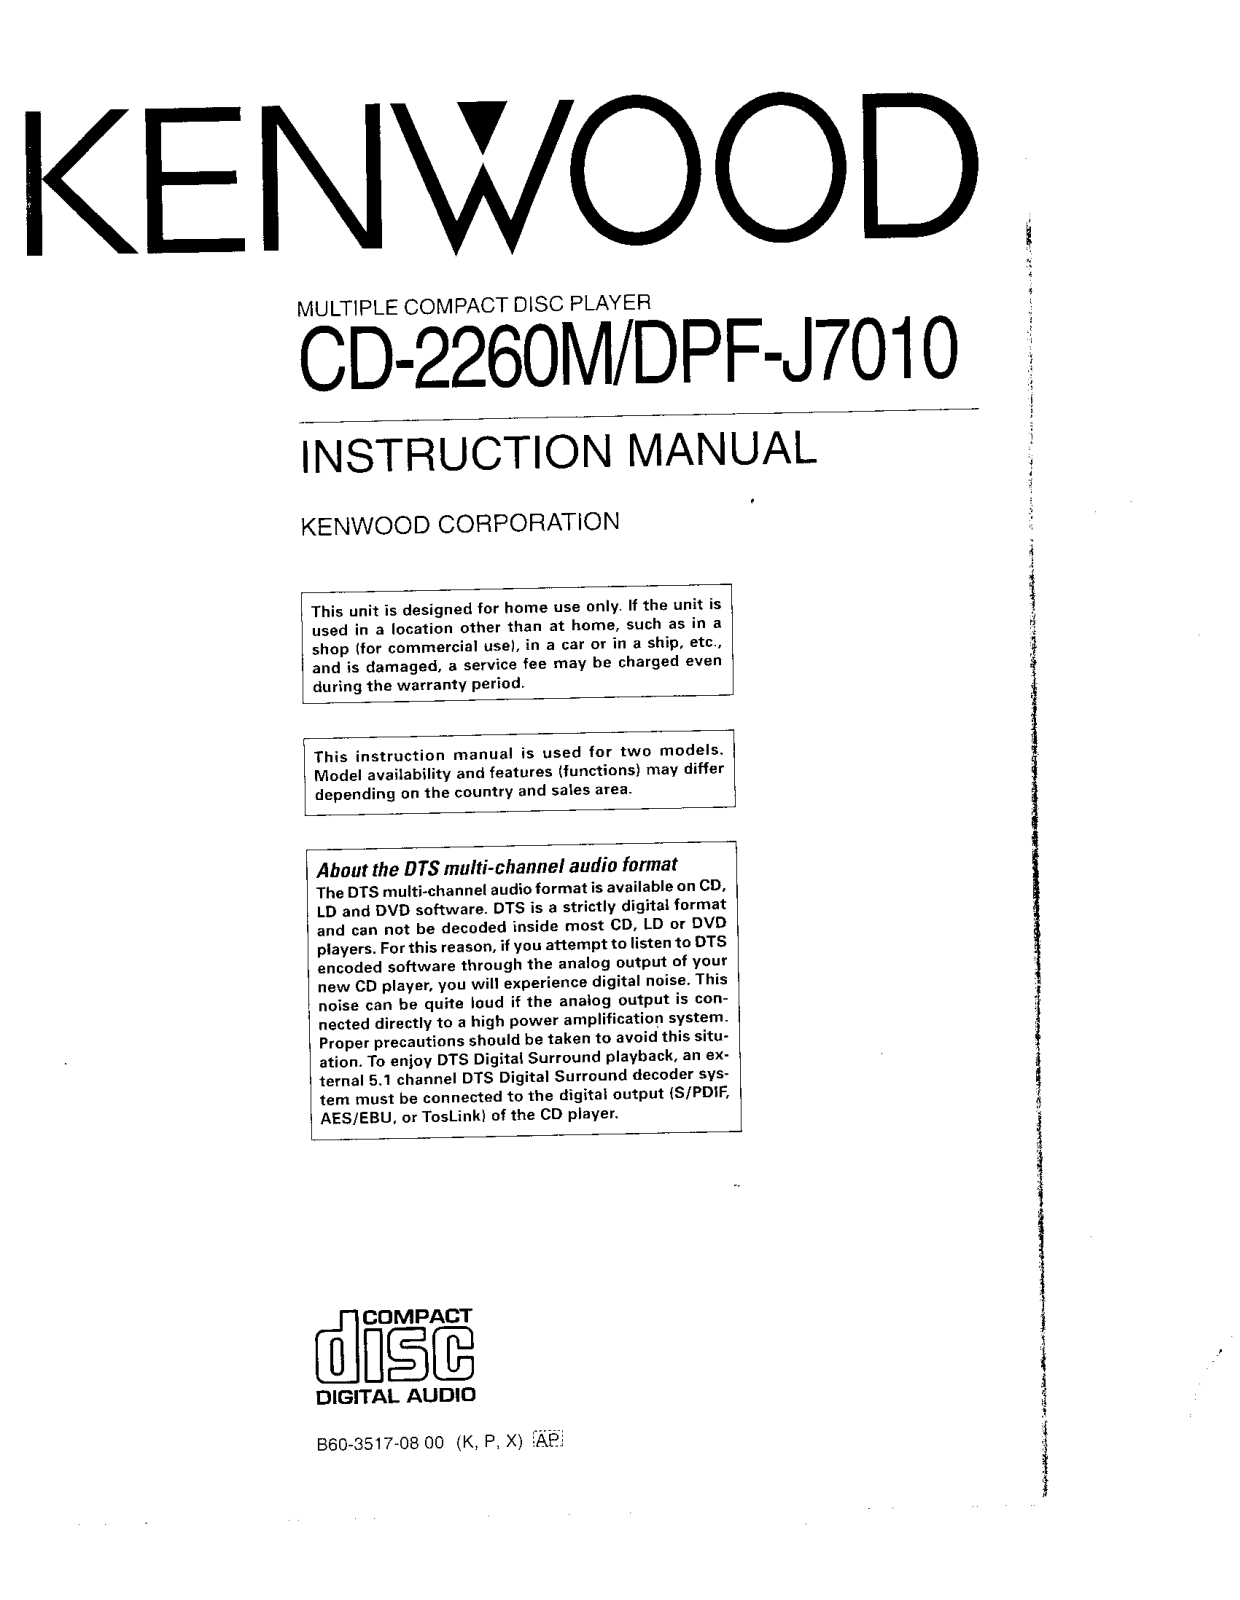 Kenwood DPF-J7010, CD-2260M User Manual